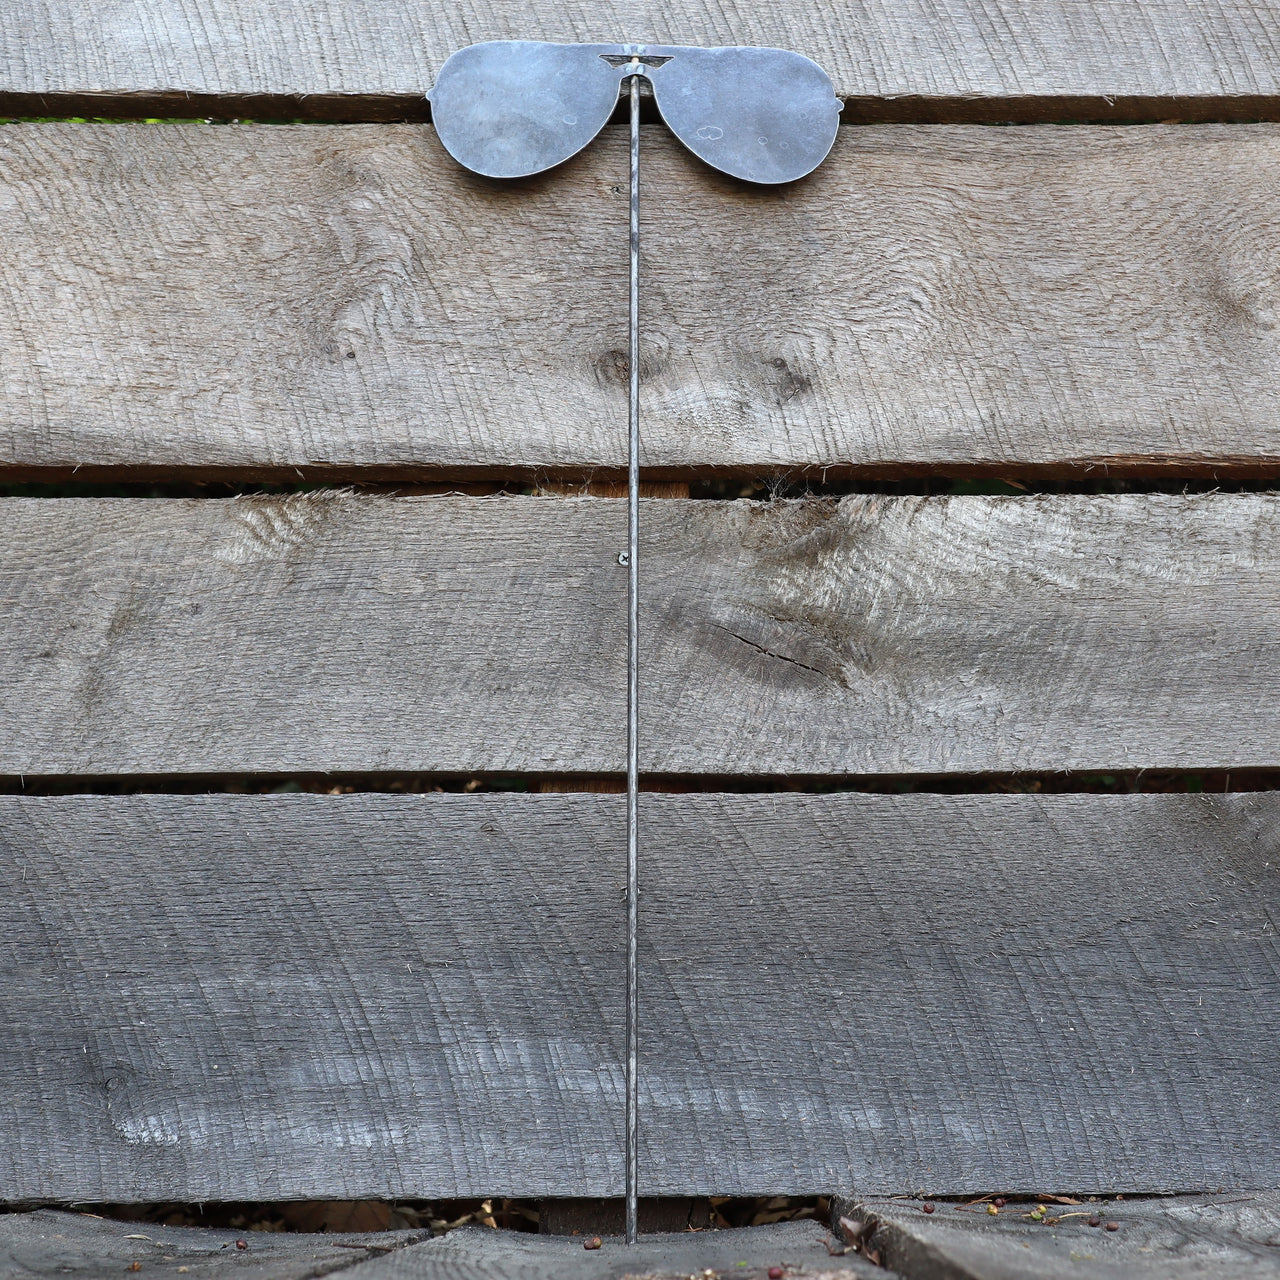 Raw Steel Sunglasses Yard Stake - Fourth of July Garden Art Marker - Metal Aviator Glasses Summer Lawn Decor